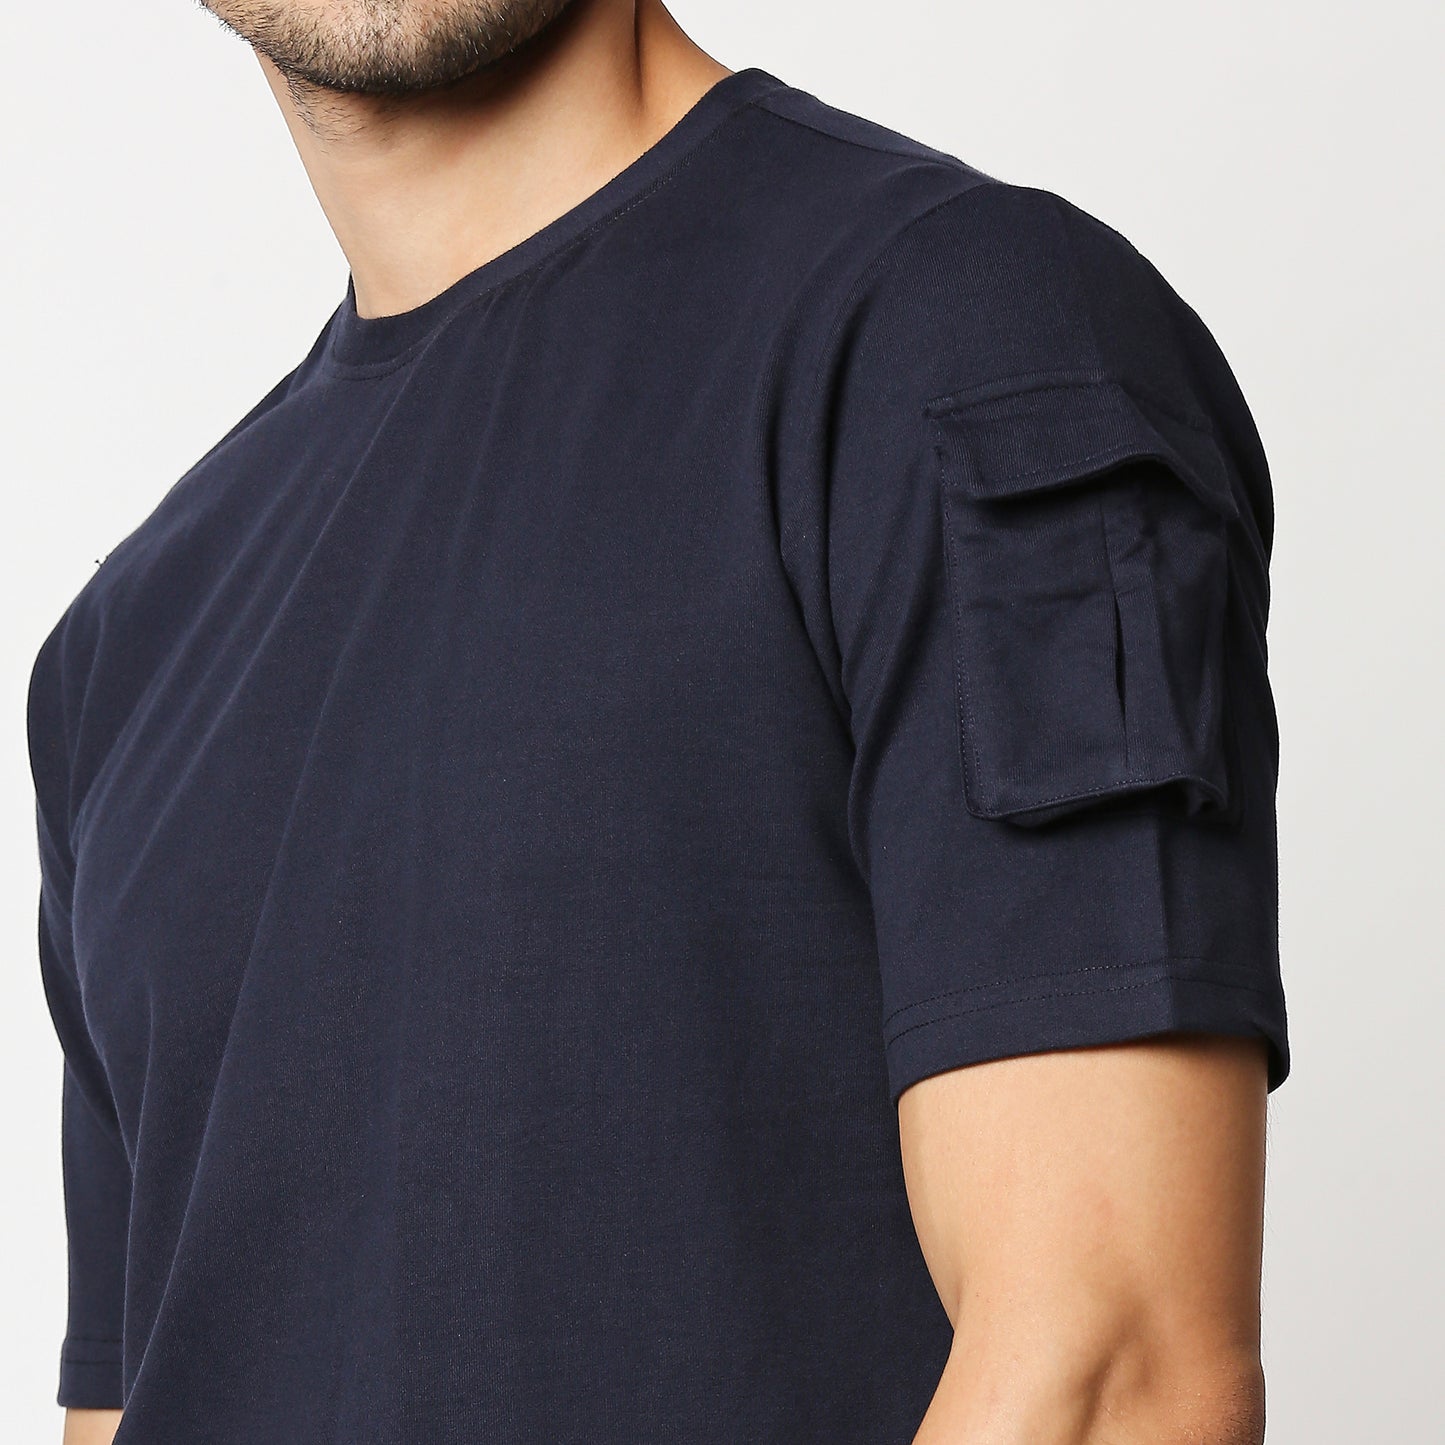 Fostino Ibu Navy Round Neck T-Shirt with Pocket on Arms Sleeves - Fostino - T-Shirts